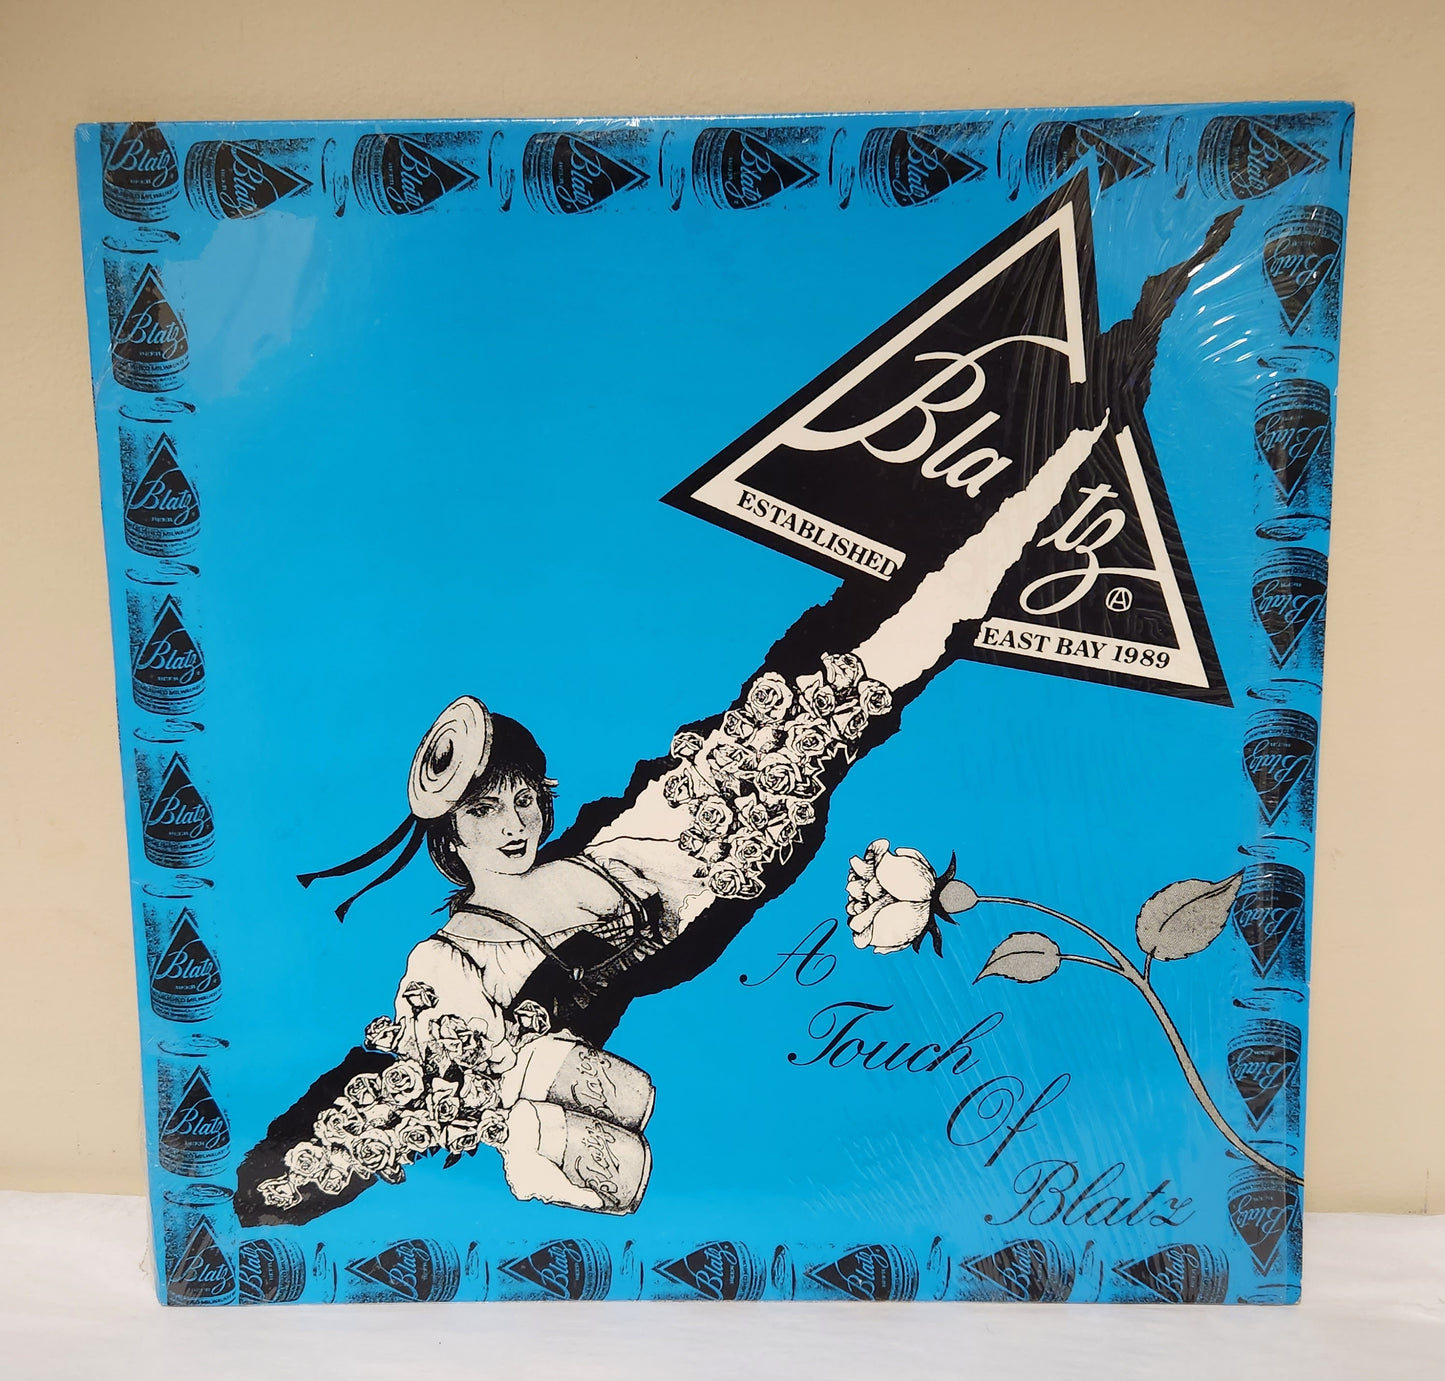 Blatz & Filth "Shit Split" 1991 Punk Rock Album With Lyric Book